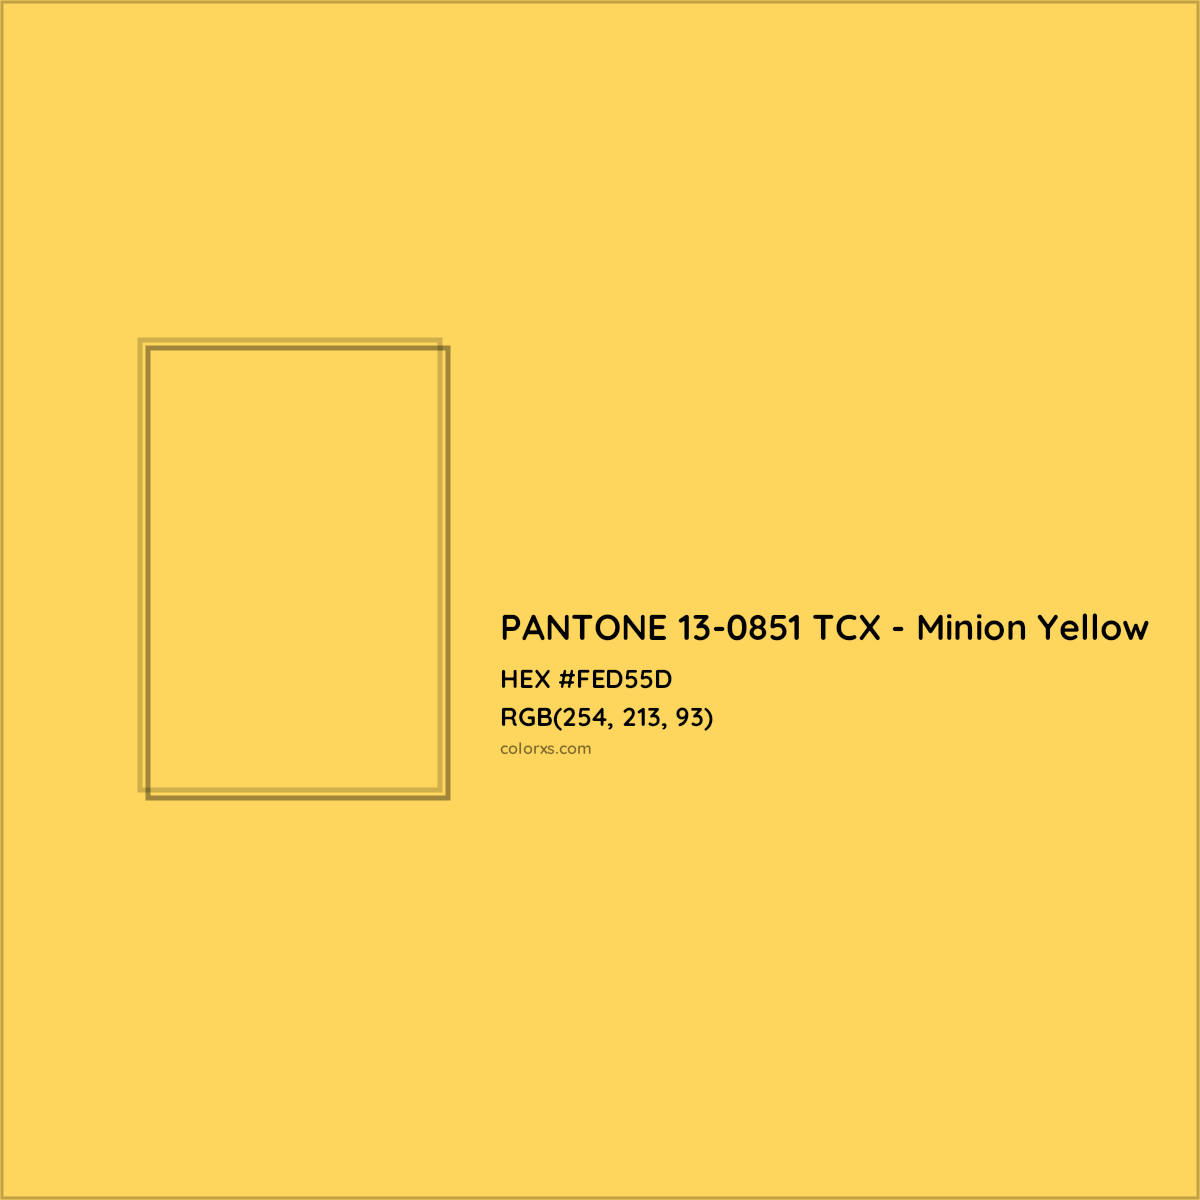 HEX #FED55D PANTONE 13-0851 TCX - Minion Yellow CMS Pantone TCX - Color Code